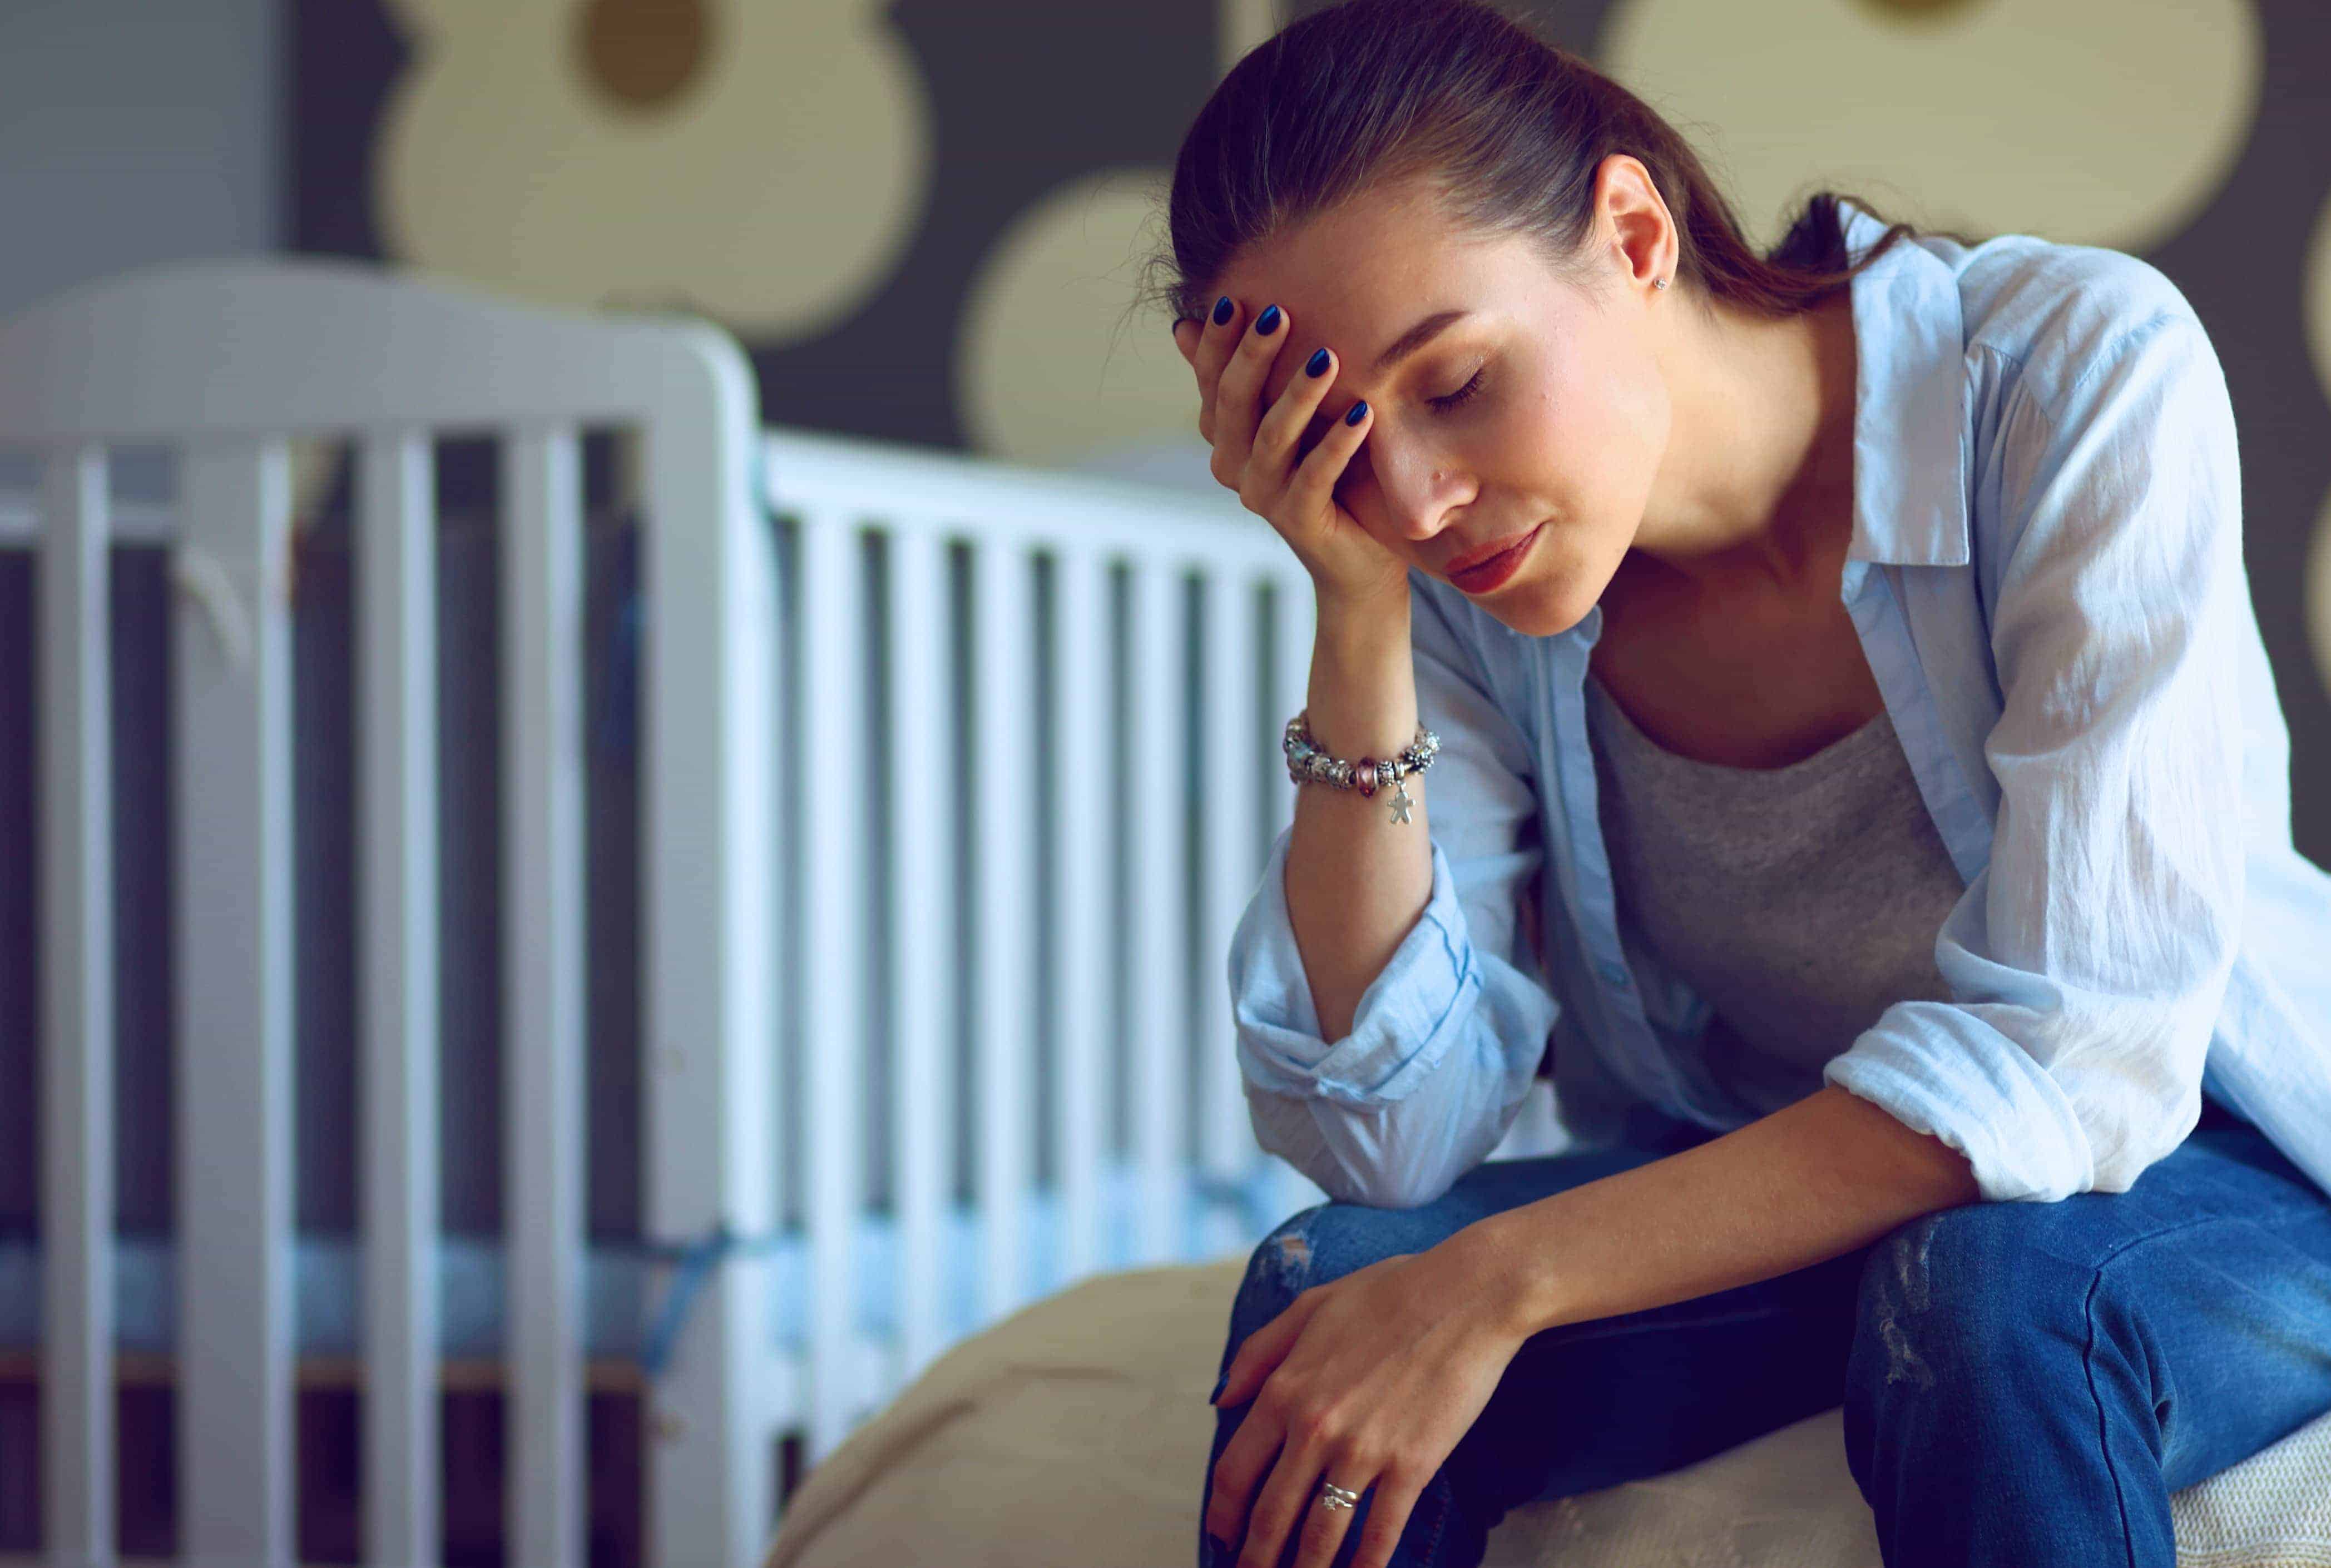 new research postpartum depression